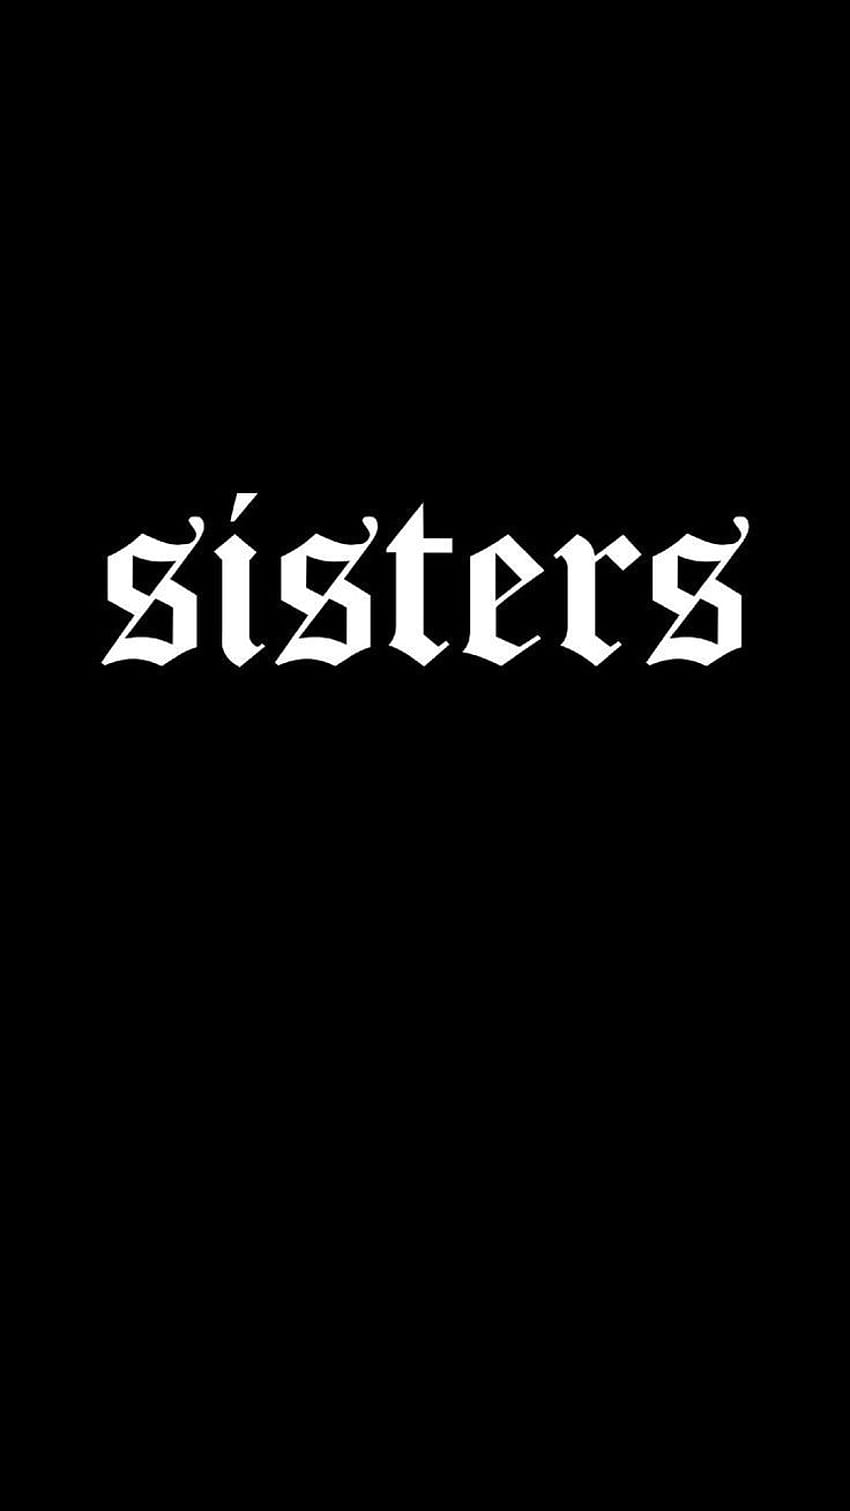 3300 Big Sister Stock Photos Pictures  RoyaltyFree Images  iStock  Big  brother big sister Im a big sister Big sister little sister